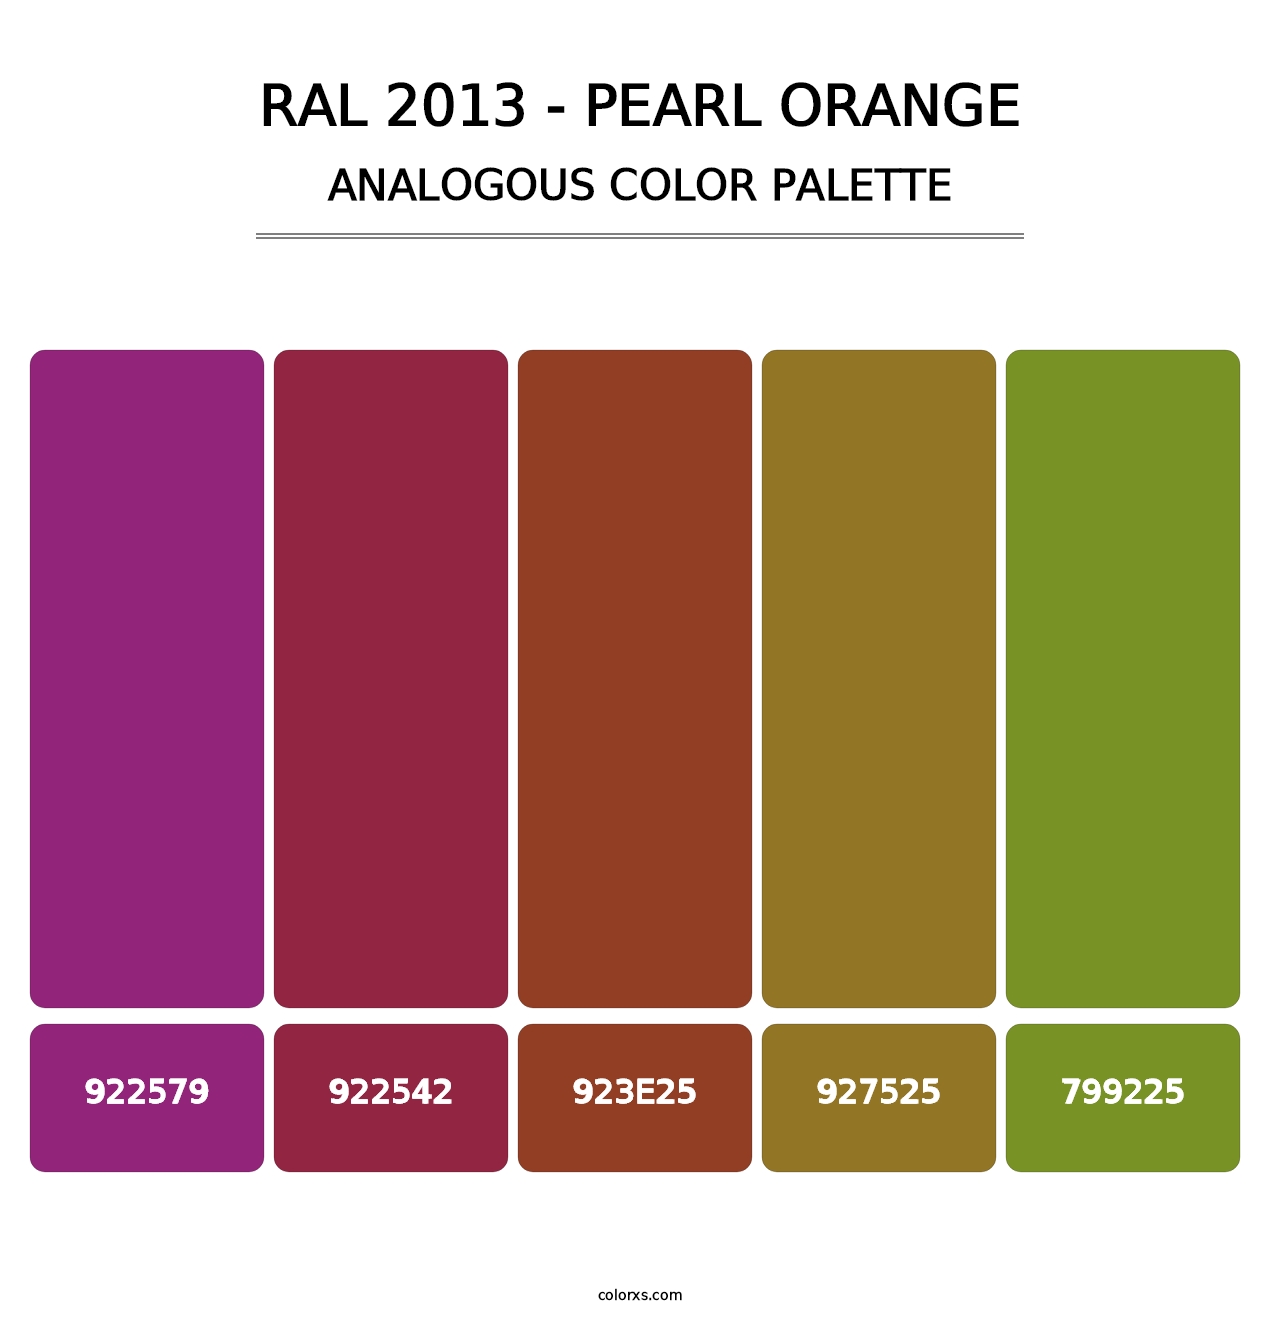 RAL 2013 - Pearl Orange - Analogous Color Palette